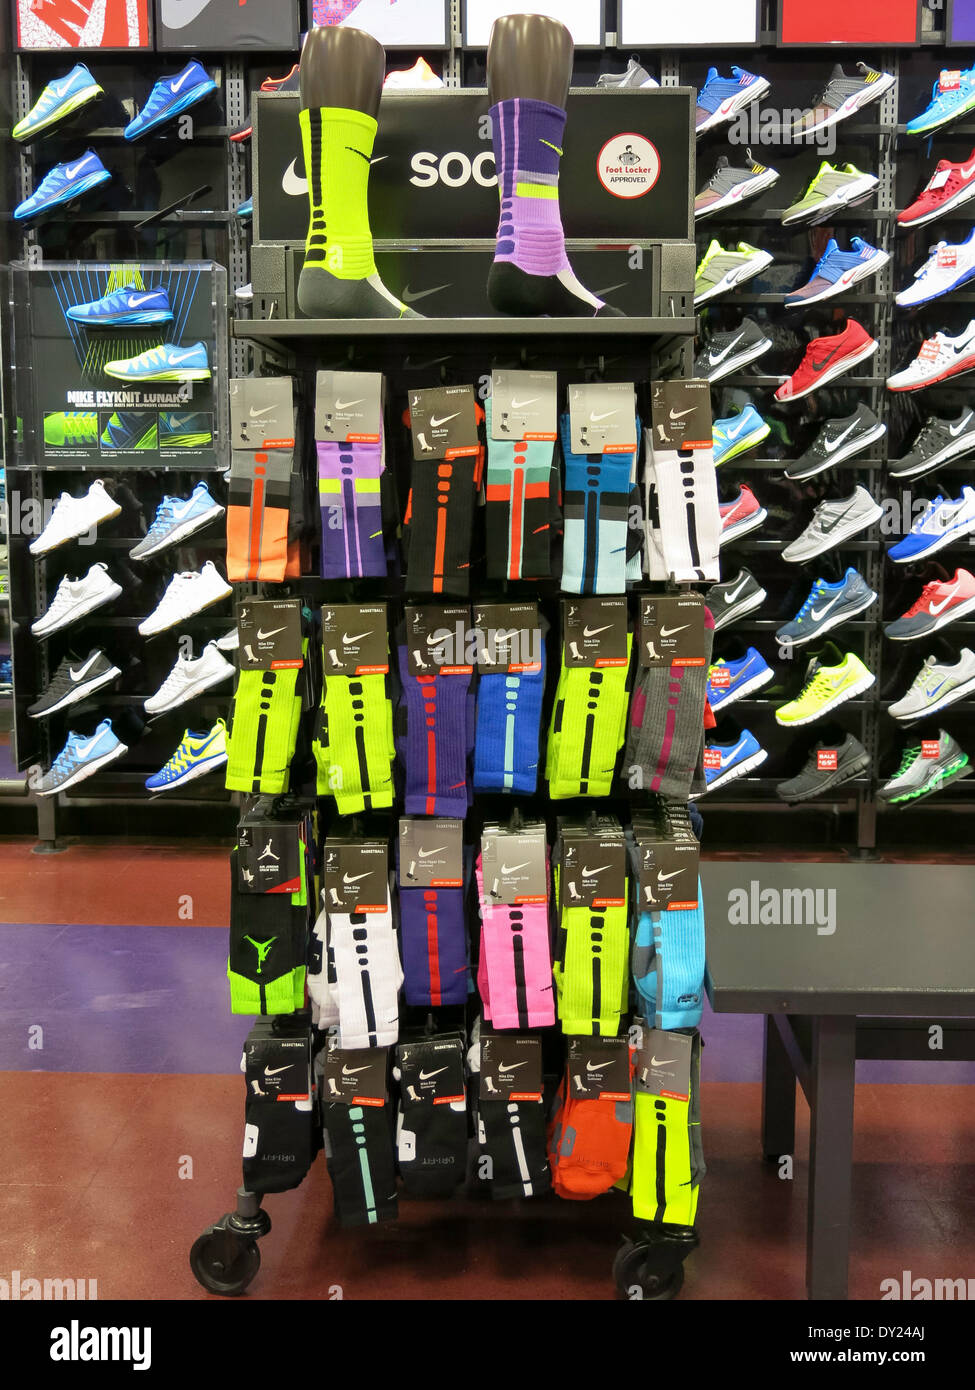 Atletica display calza e scarpa a parete, Foot Locker, International Plaza,  Tampa, FL, Stati Uniti d'America Foto stock - Alamy